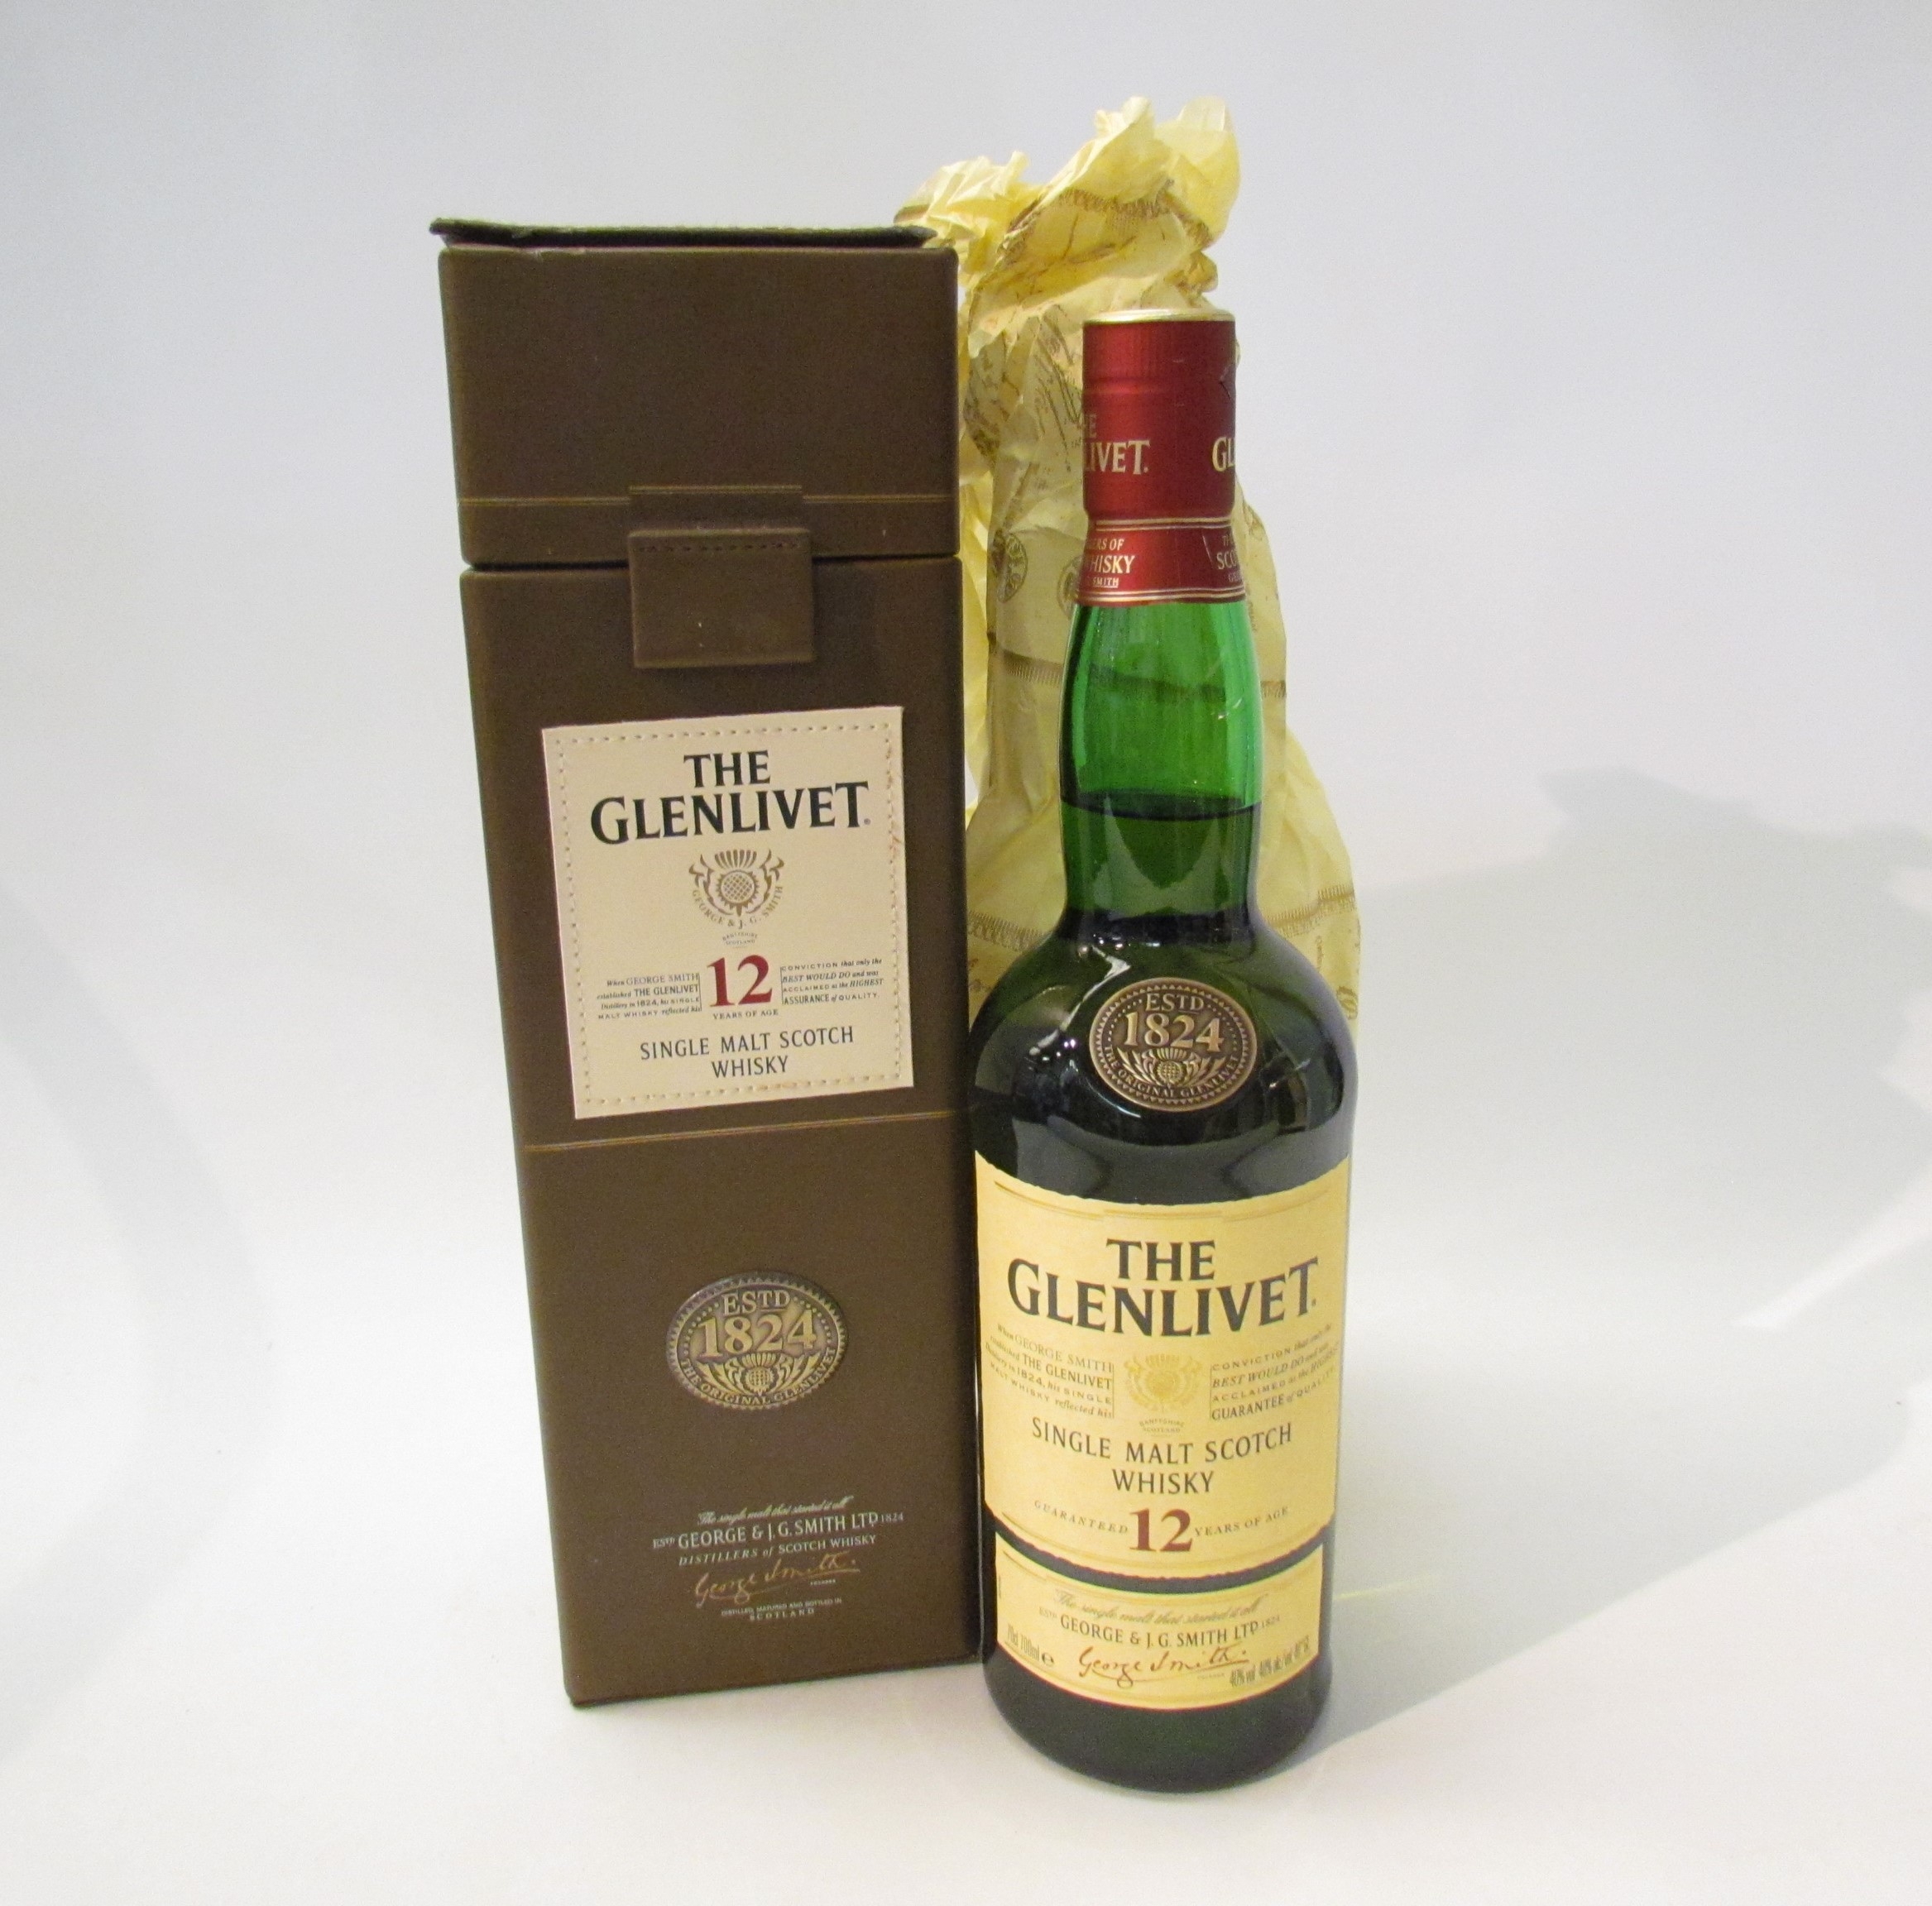 The Glenlivet 12 Year Old Single Malt Scotch Whisky, 70cl in case